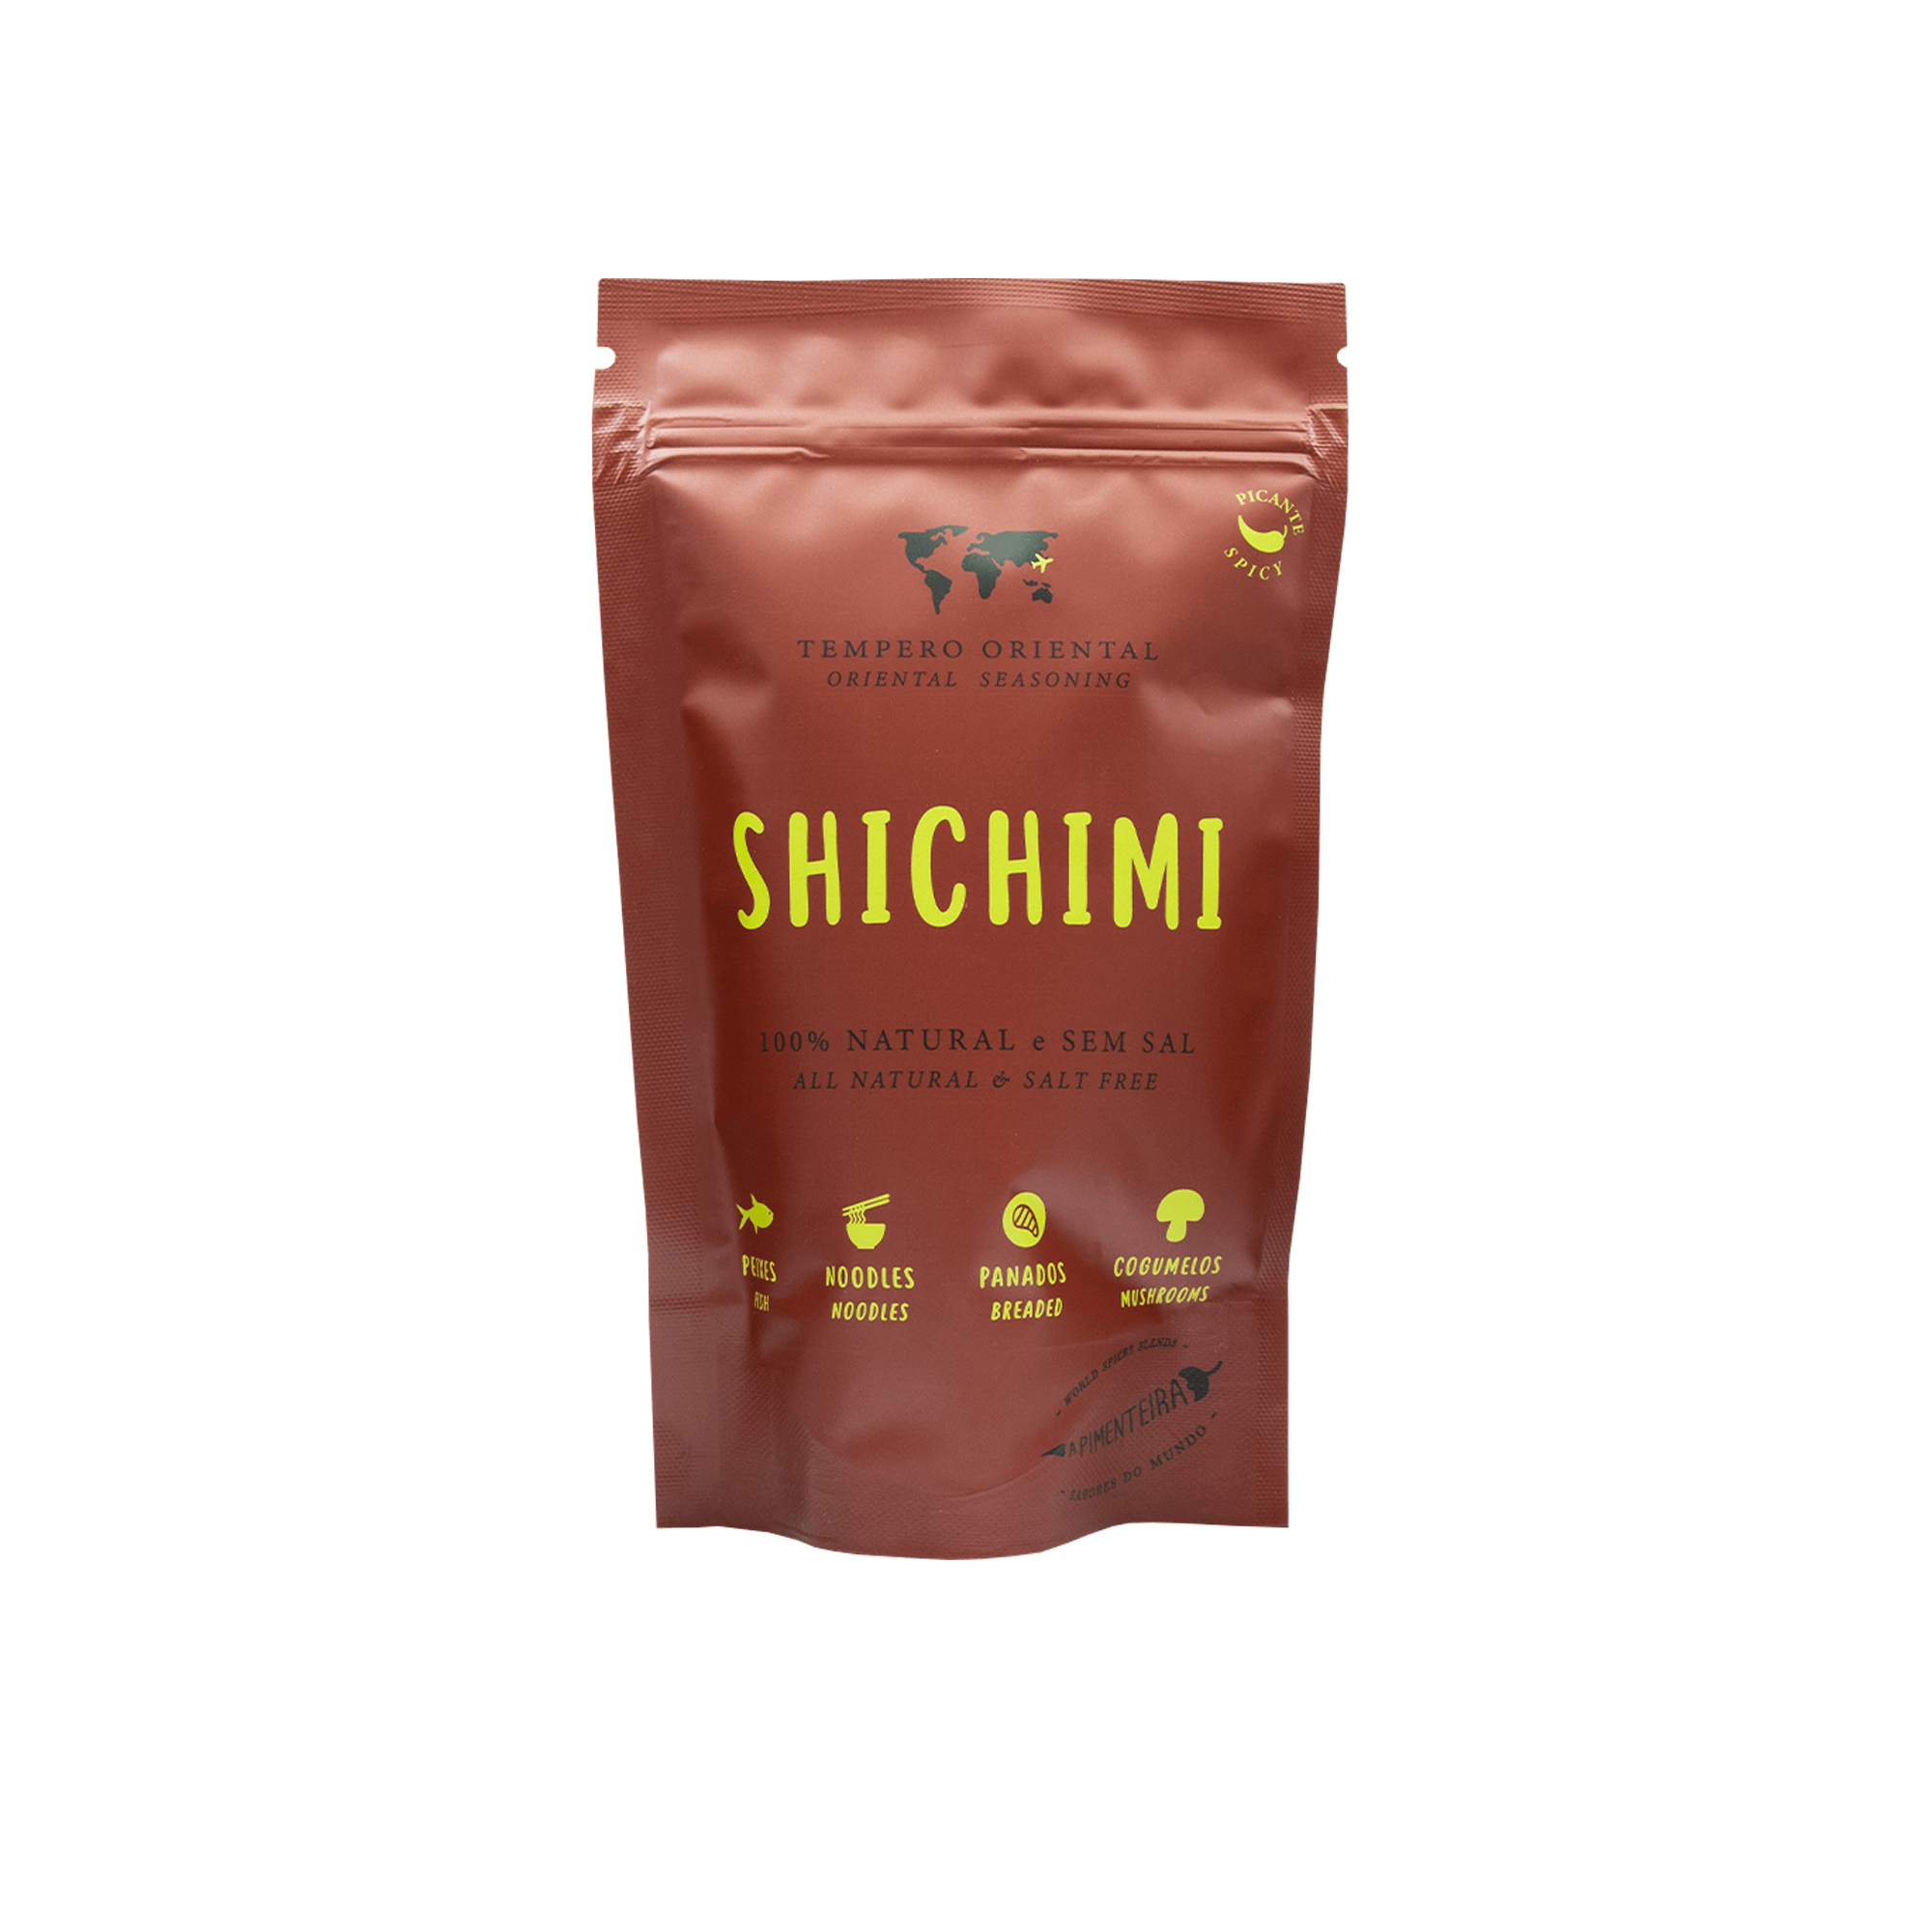 shichimi-160g-front-gourmenu-compraloja